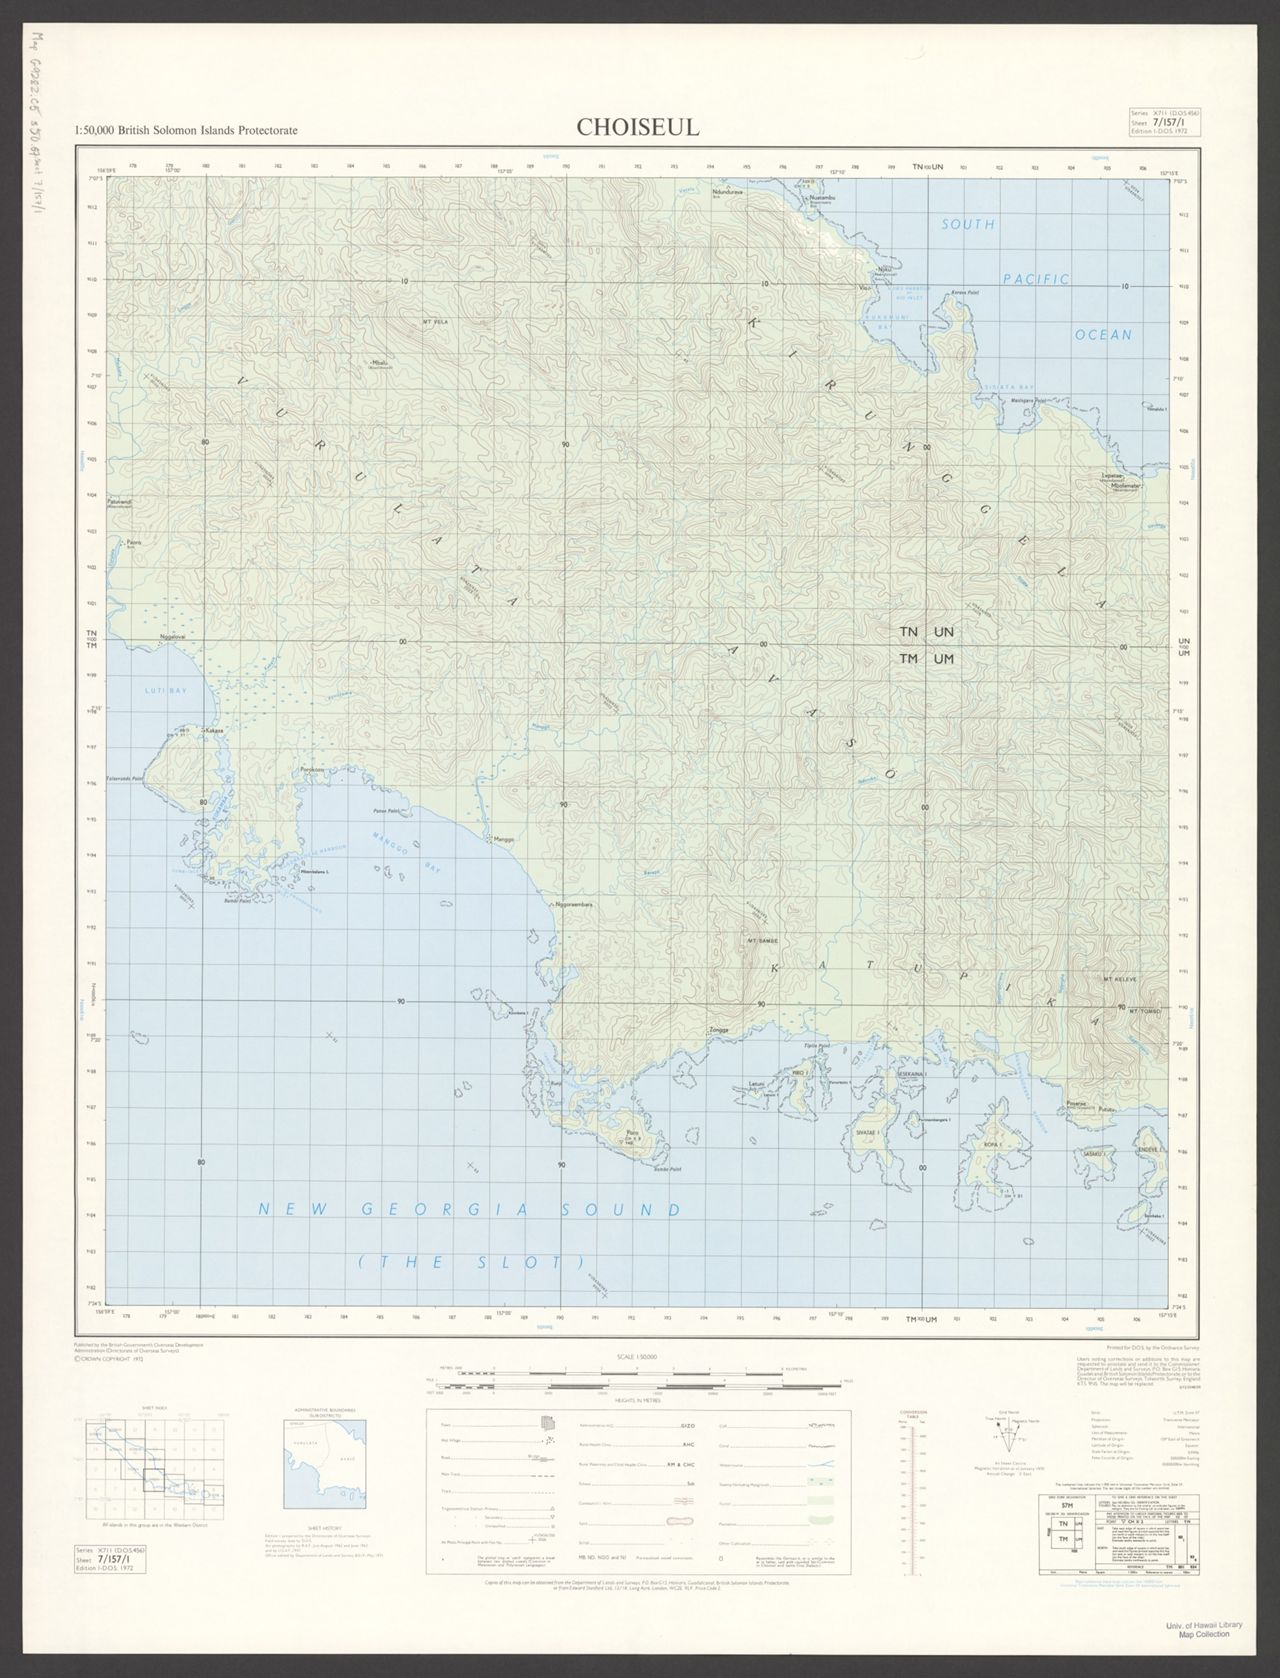 Islands, British Solomon Islands Protectorate, DOS 456, Series X711, 1:50,000, Index Map